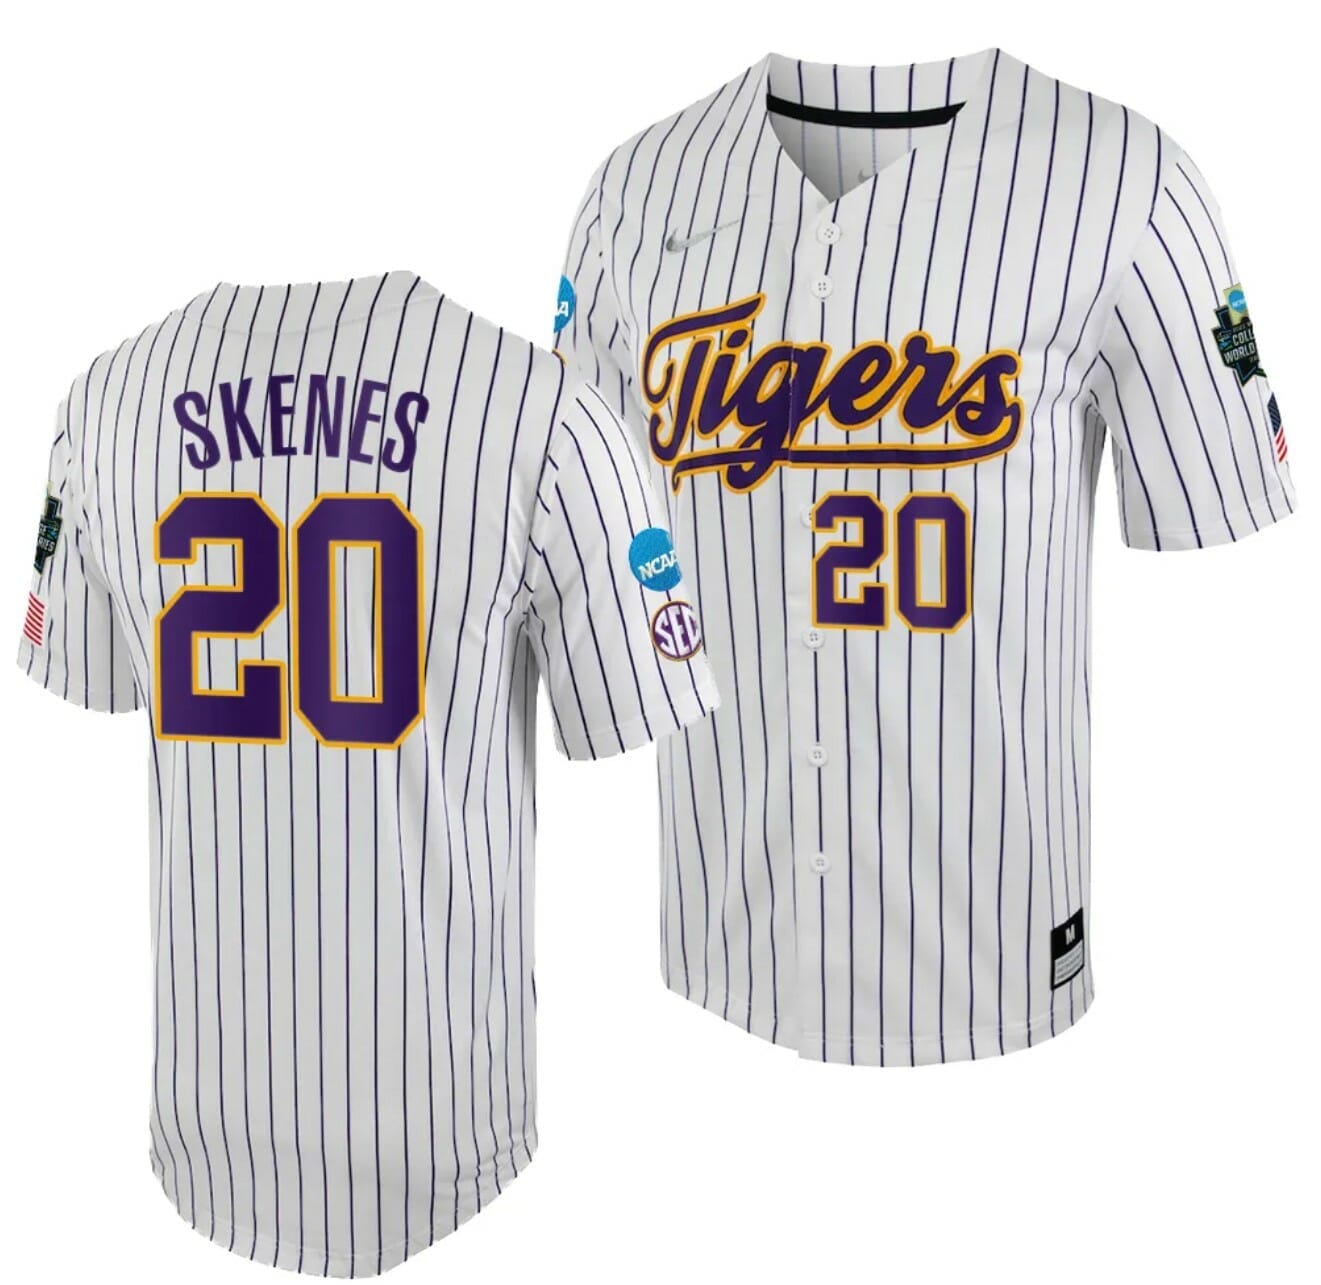 Hot] Buy New Paul Skenes Jersey LSU Tigers White Purple WS